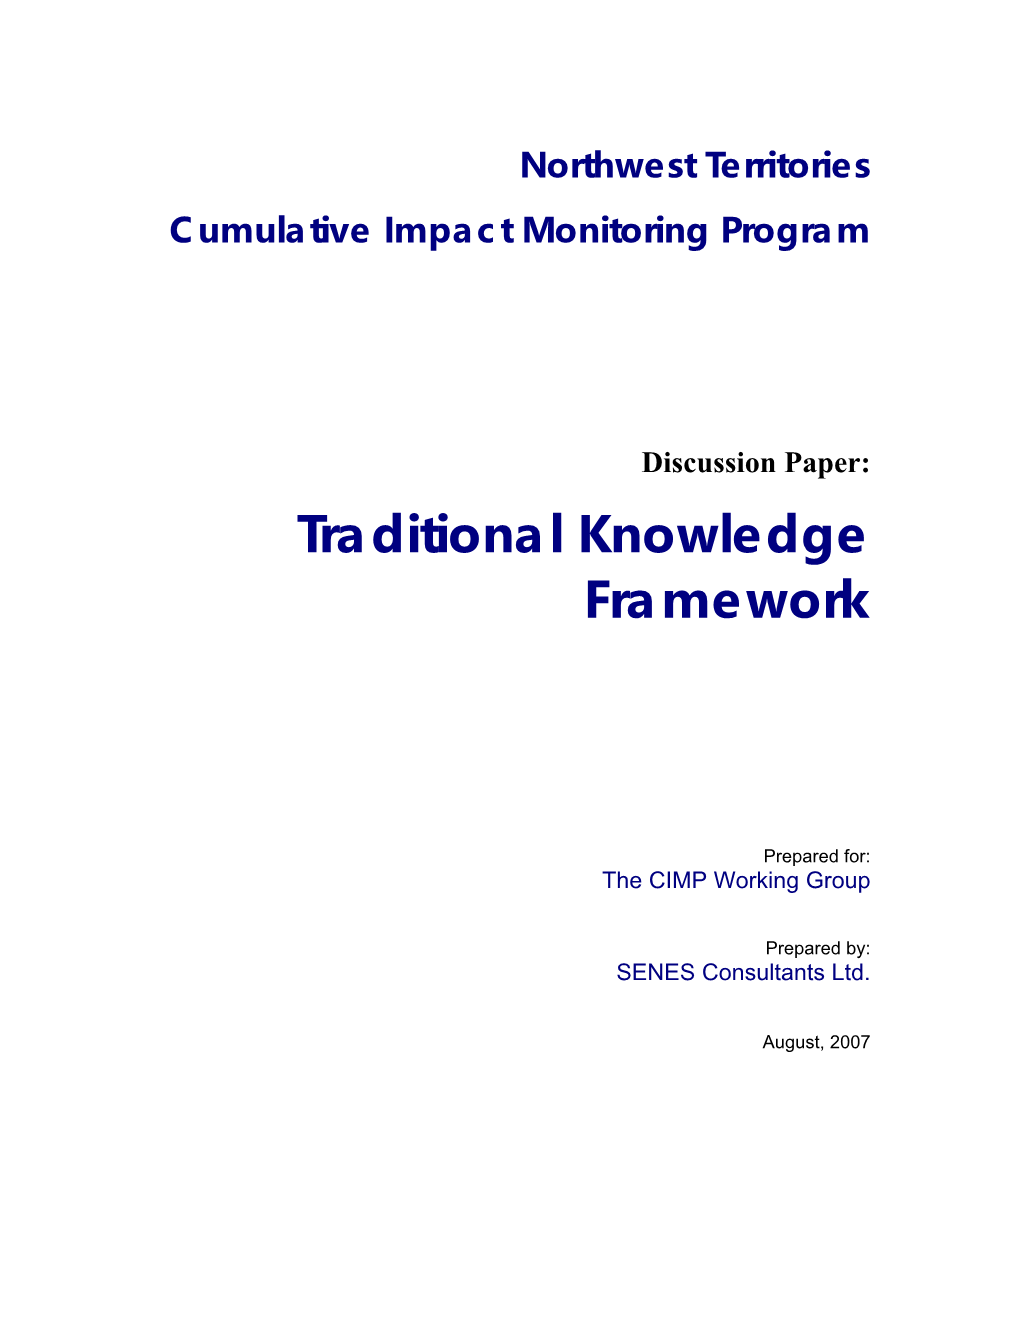 Traditional Knowledge Framework